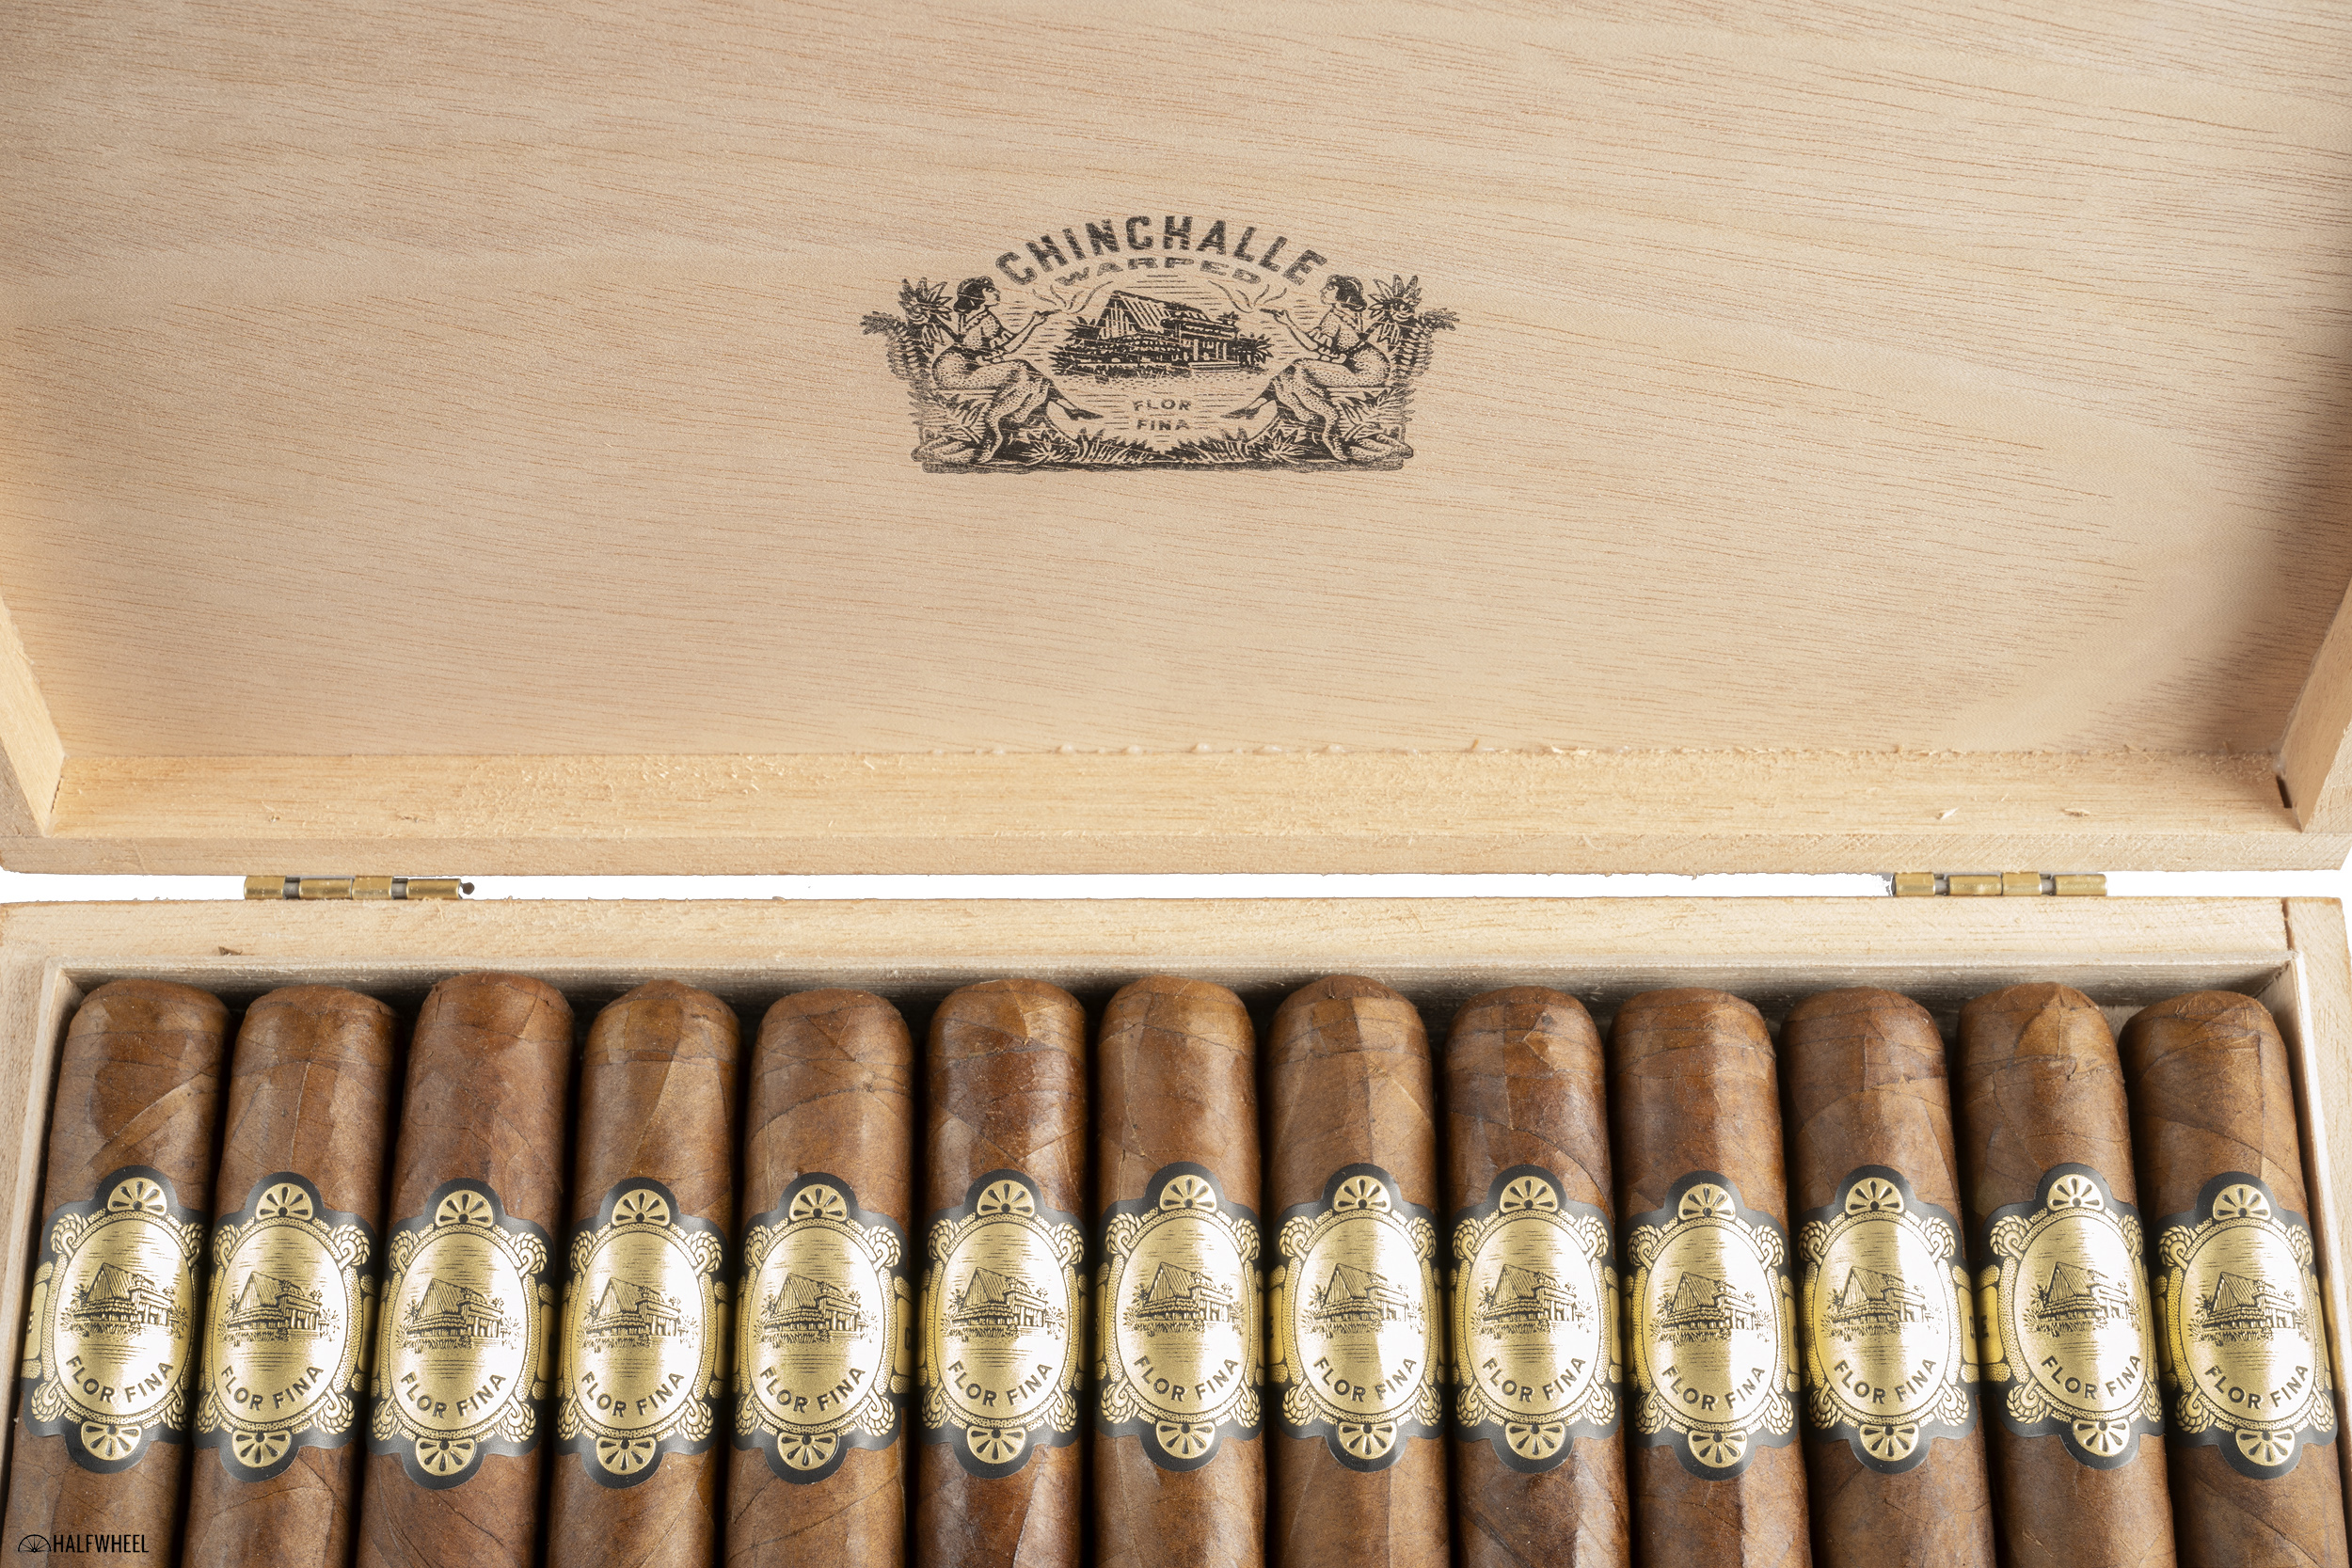  Chinchalle Robusto Empty Wood Cigar Box 11 x 6 x 2